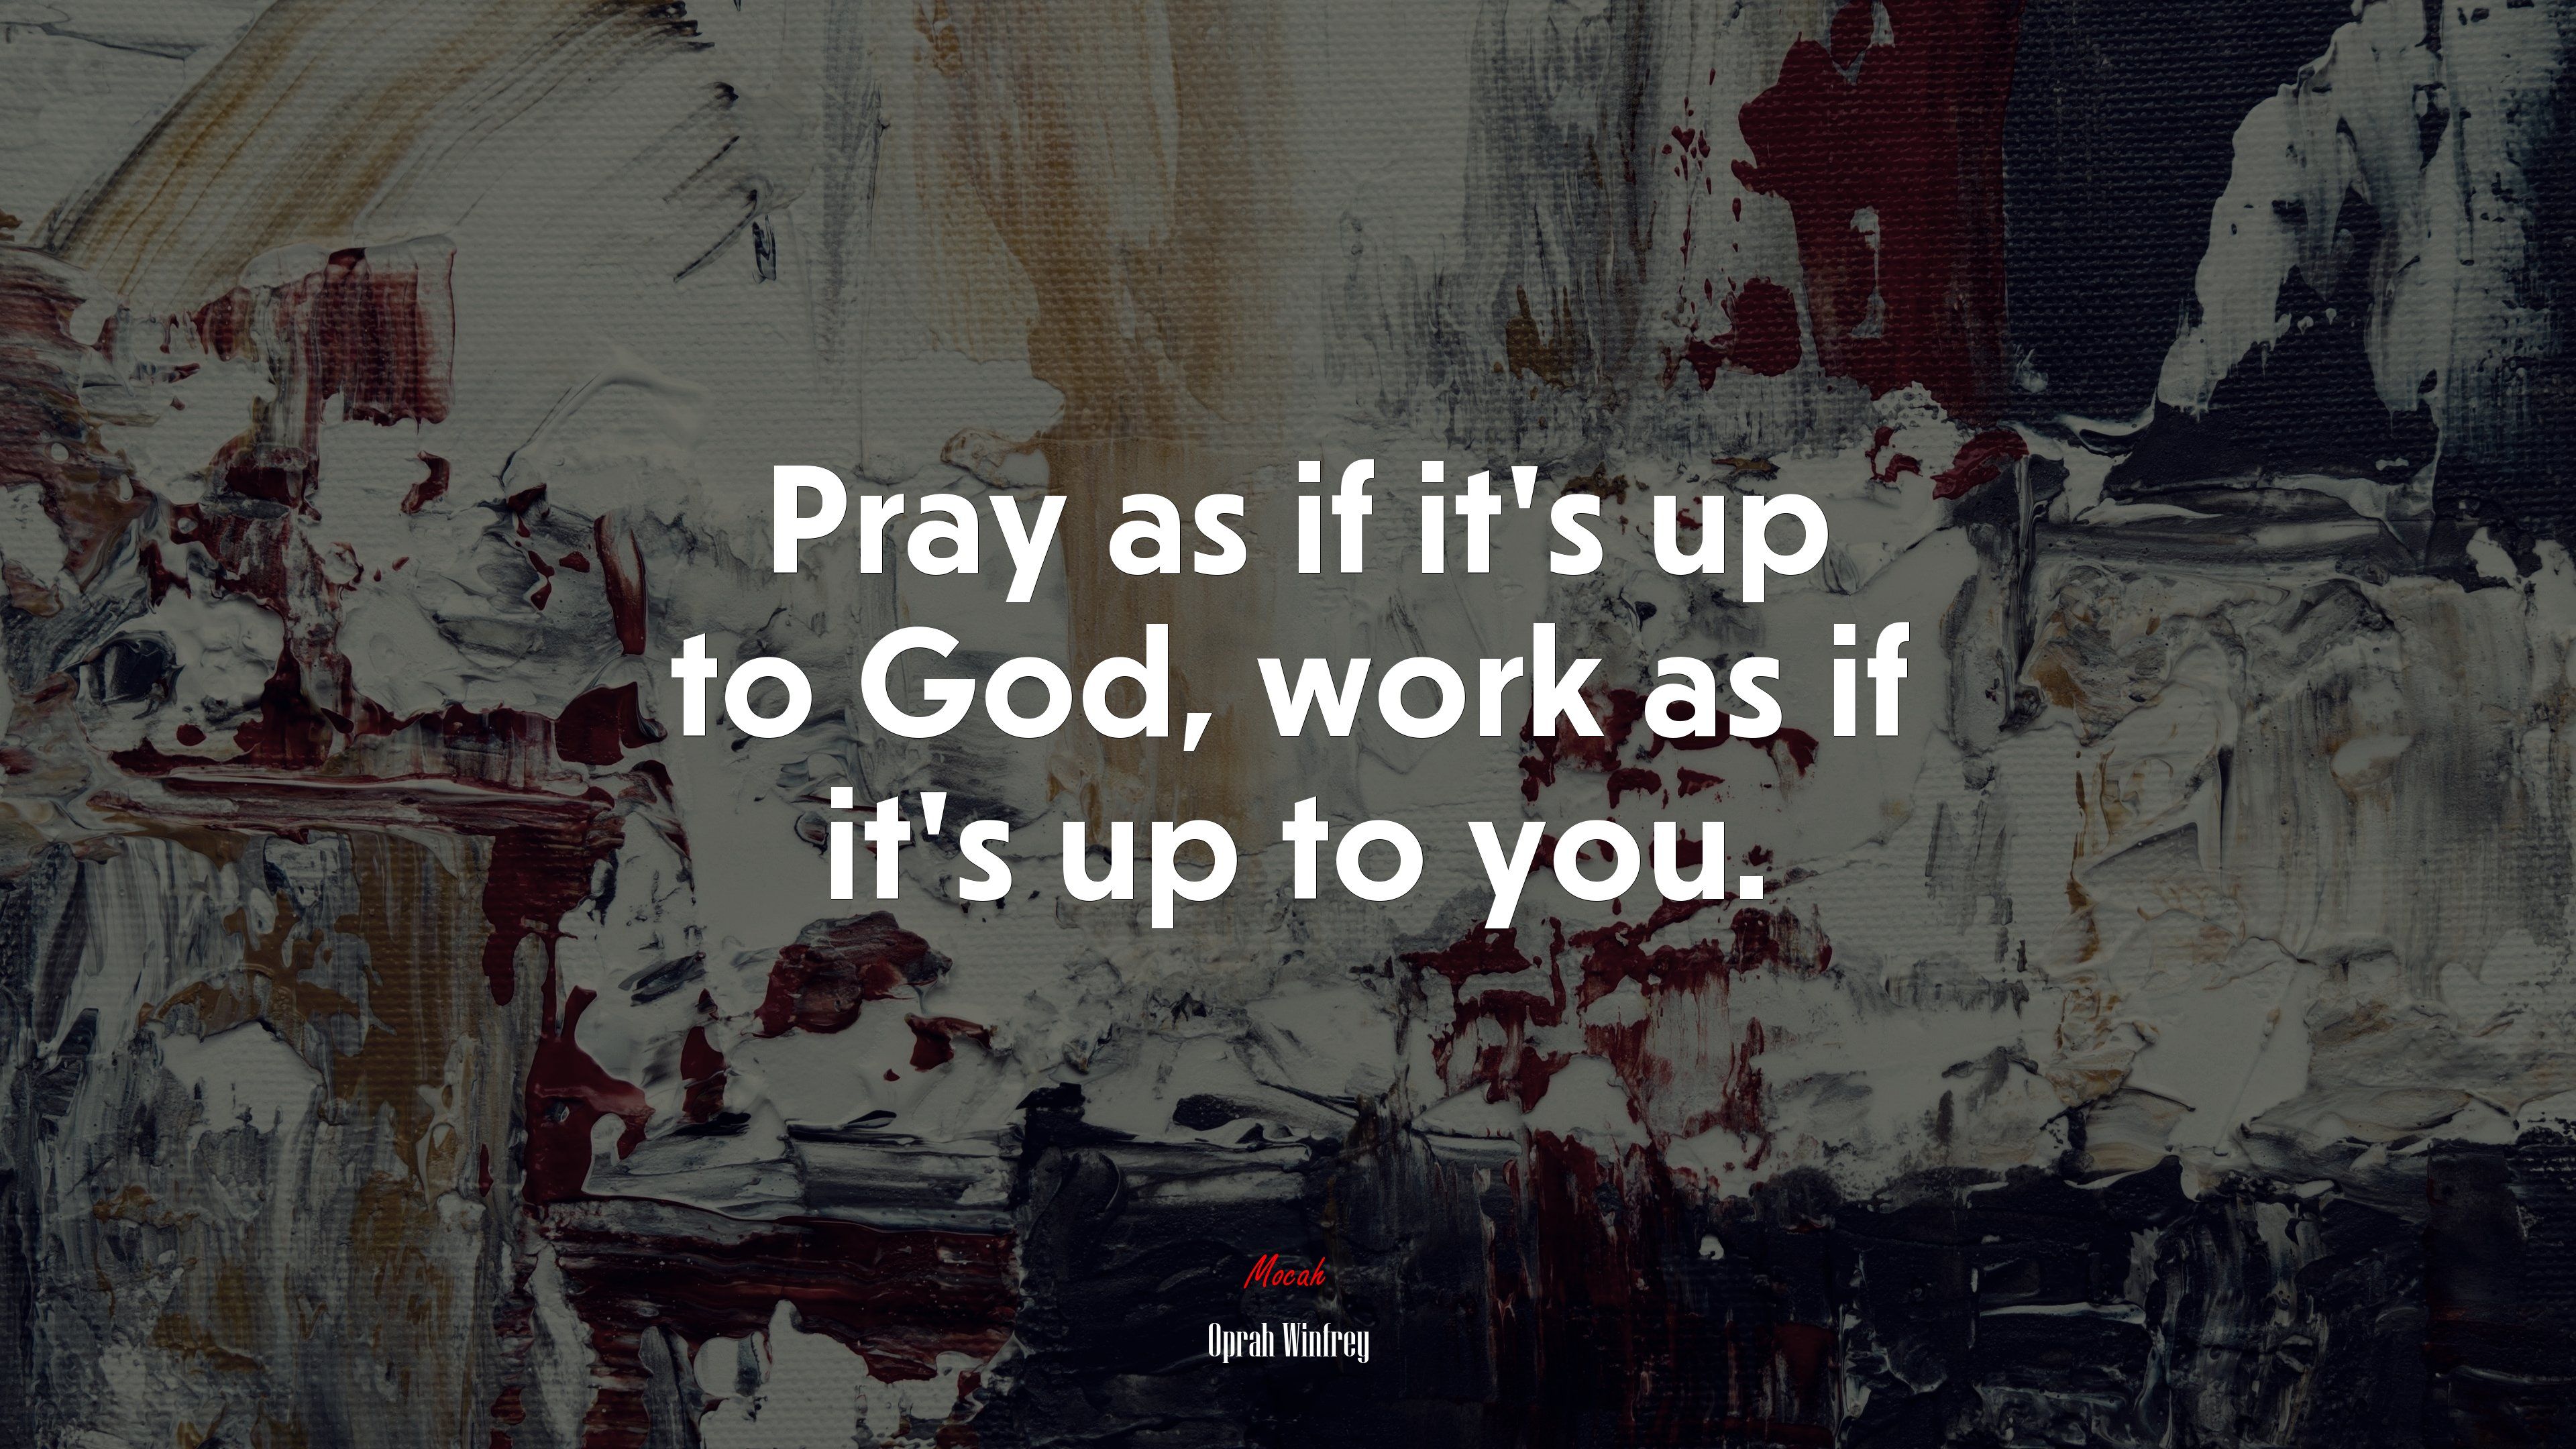 Pray as if it's up to God, work as if it's up to you. Oprah Winfrey quote, 4k wallpaper. Mocah.org HD Desktop Wallpaper